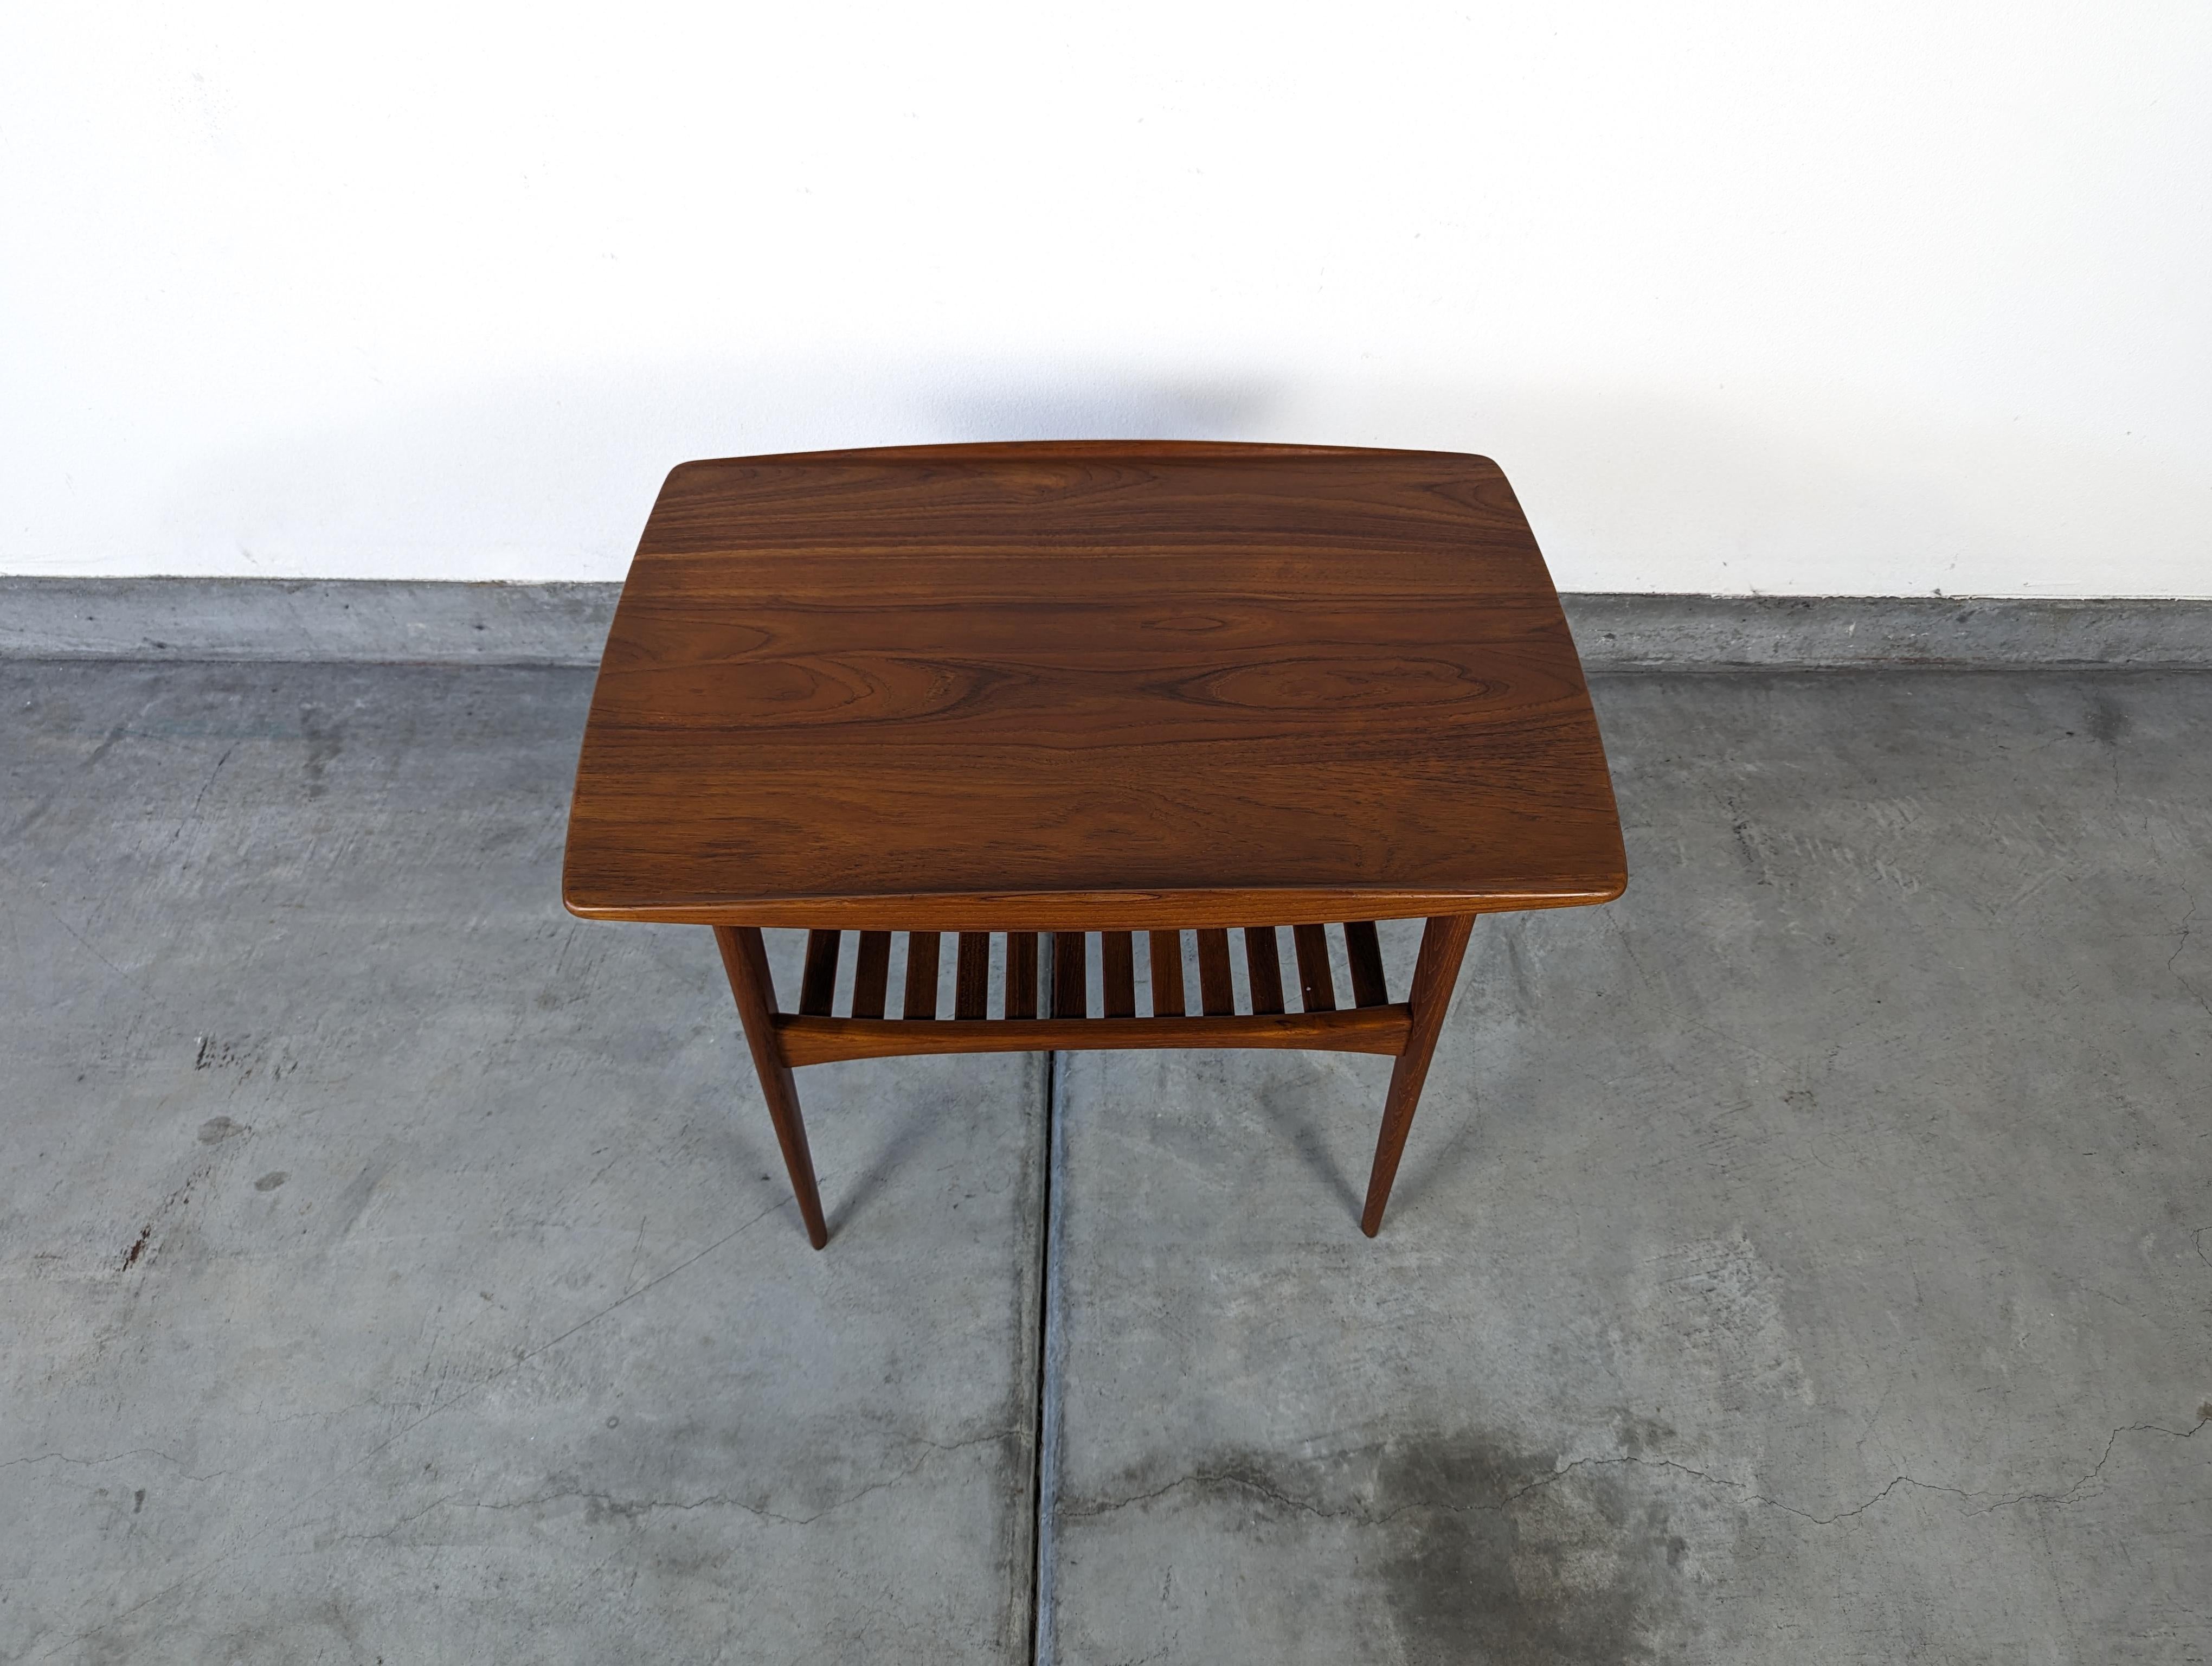 Mid-20th Century Danish Solid Teak Mid Century Side Table by Finn Juhl for France & Søn, c1950s For Sale